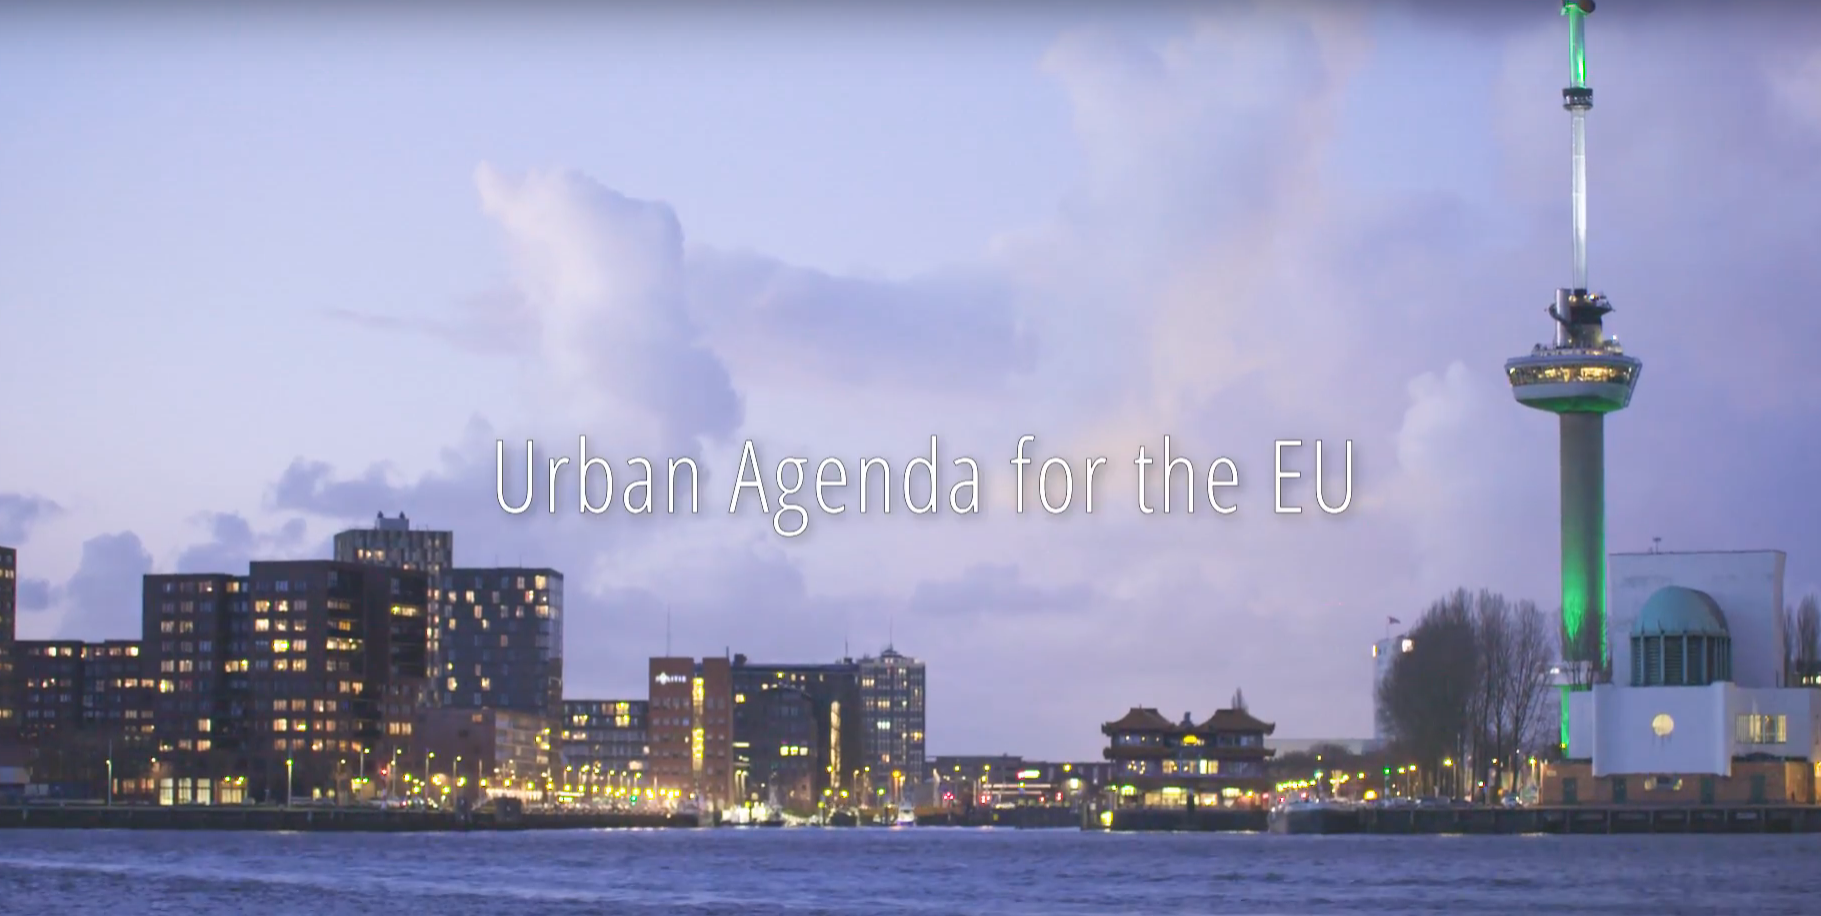 Presenting the Urban Agenda for the EU